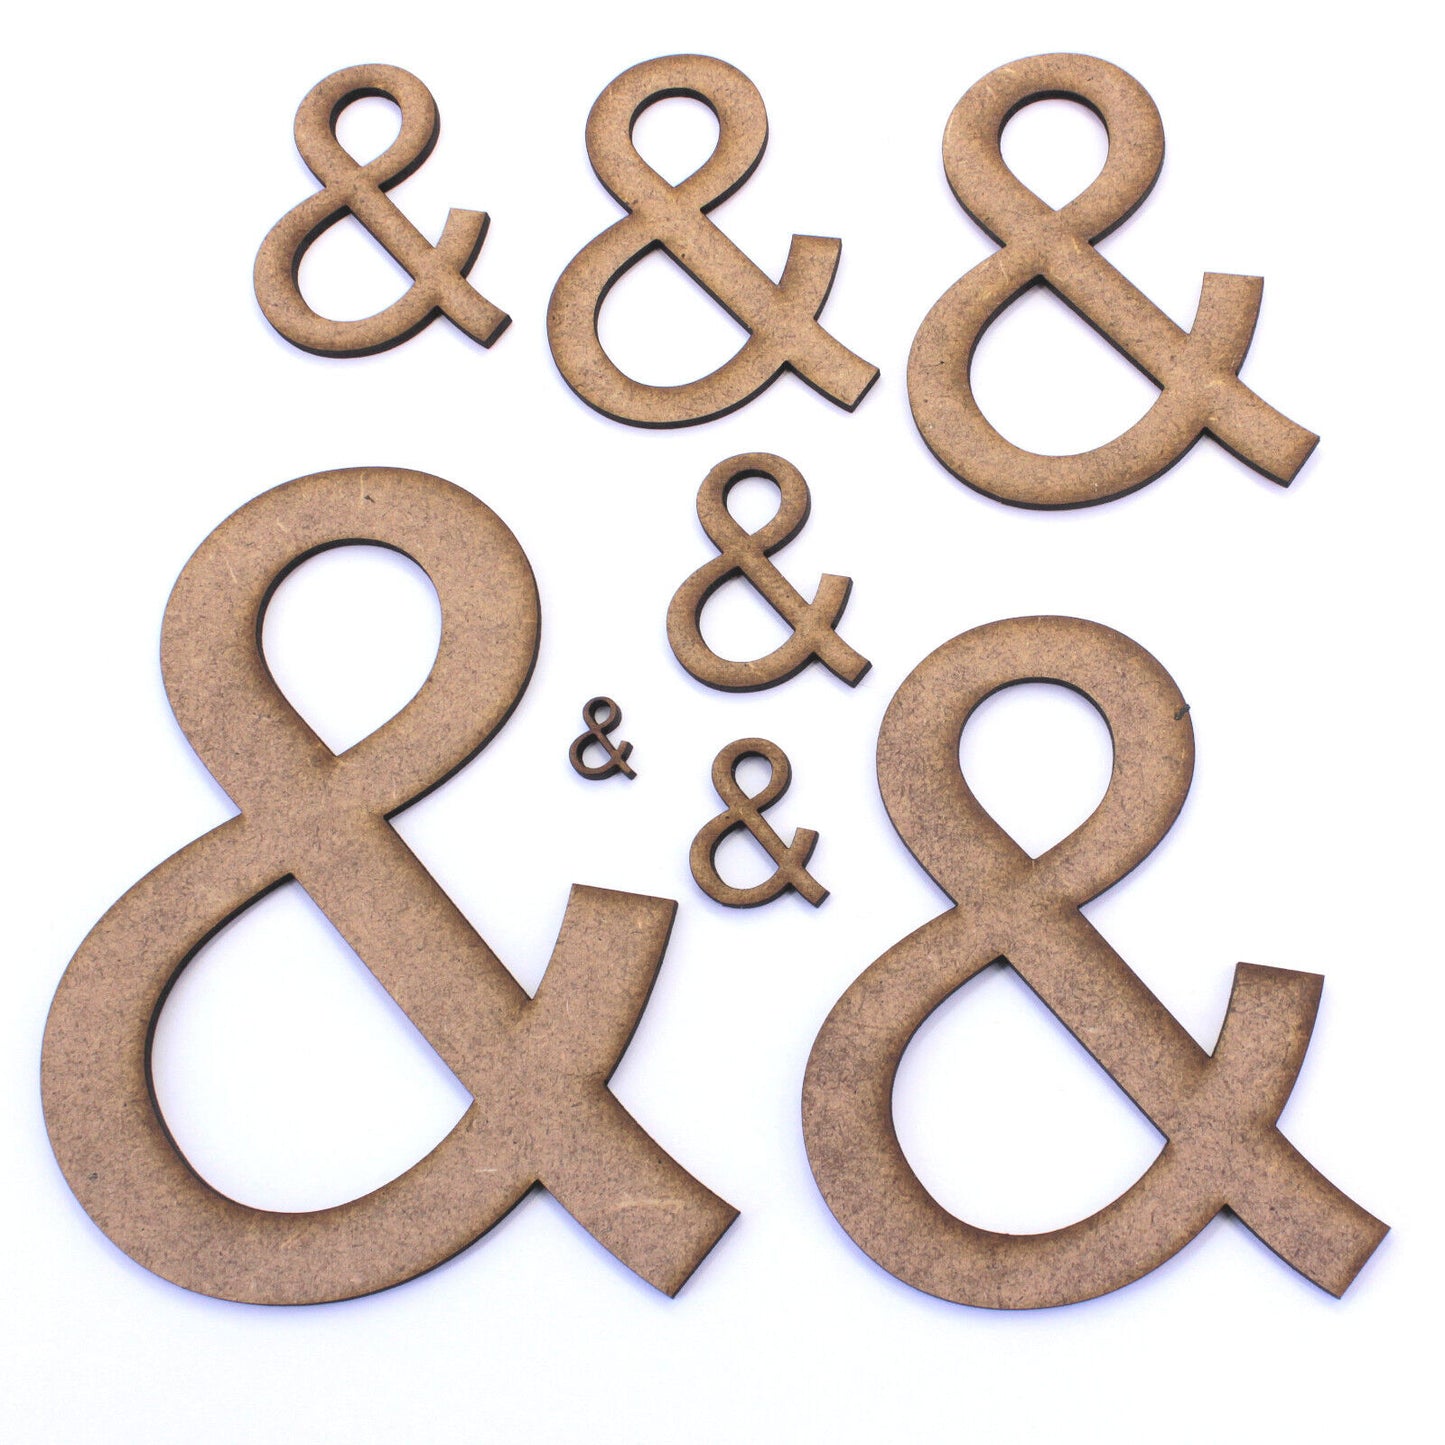 Ampersand '&' Sign Symbol. Craft Shapes, Embellishments, Decorations, 2mm MDF